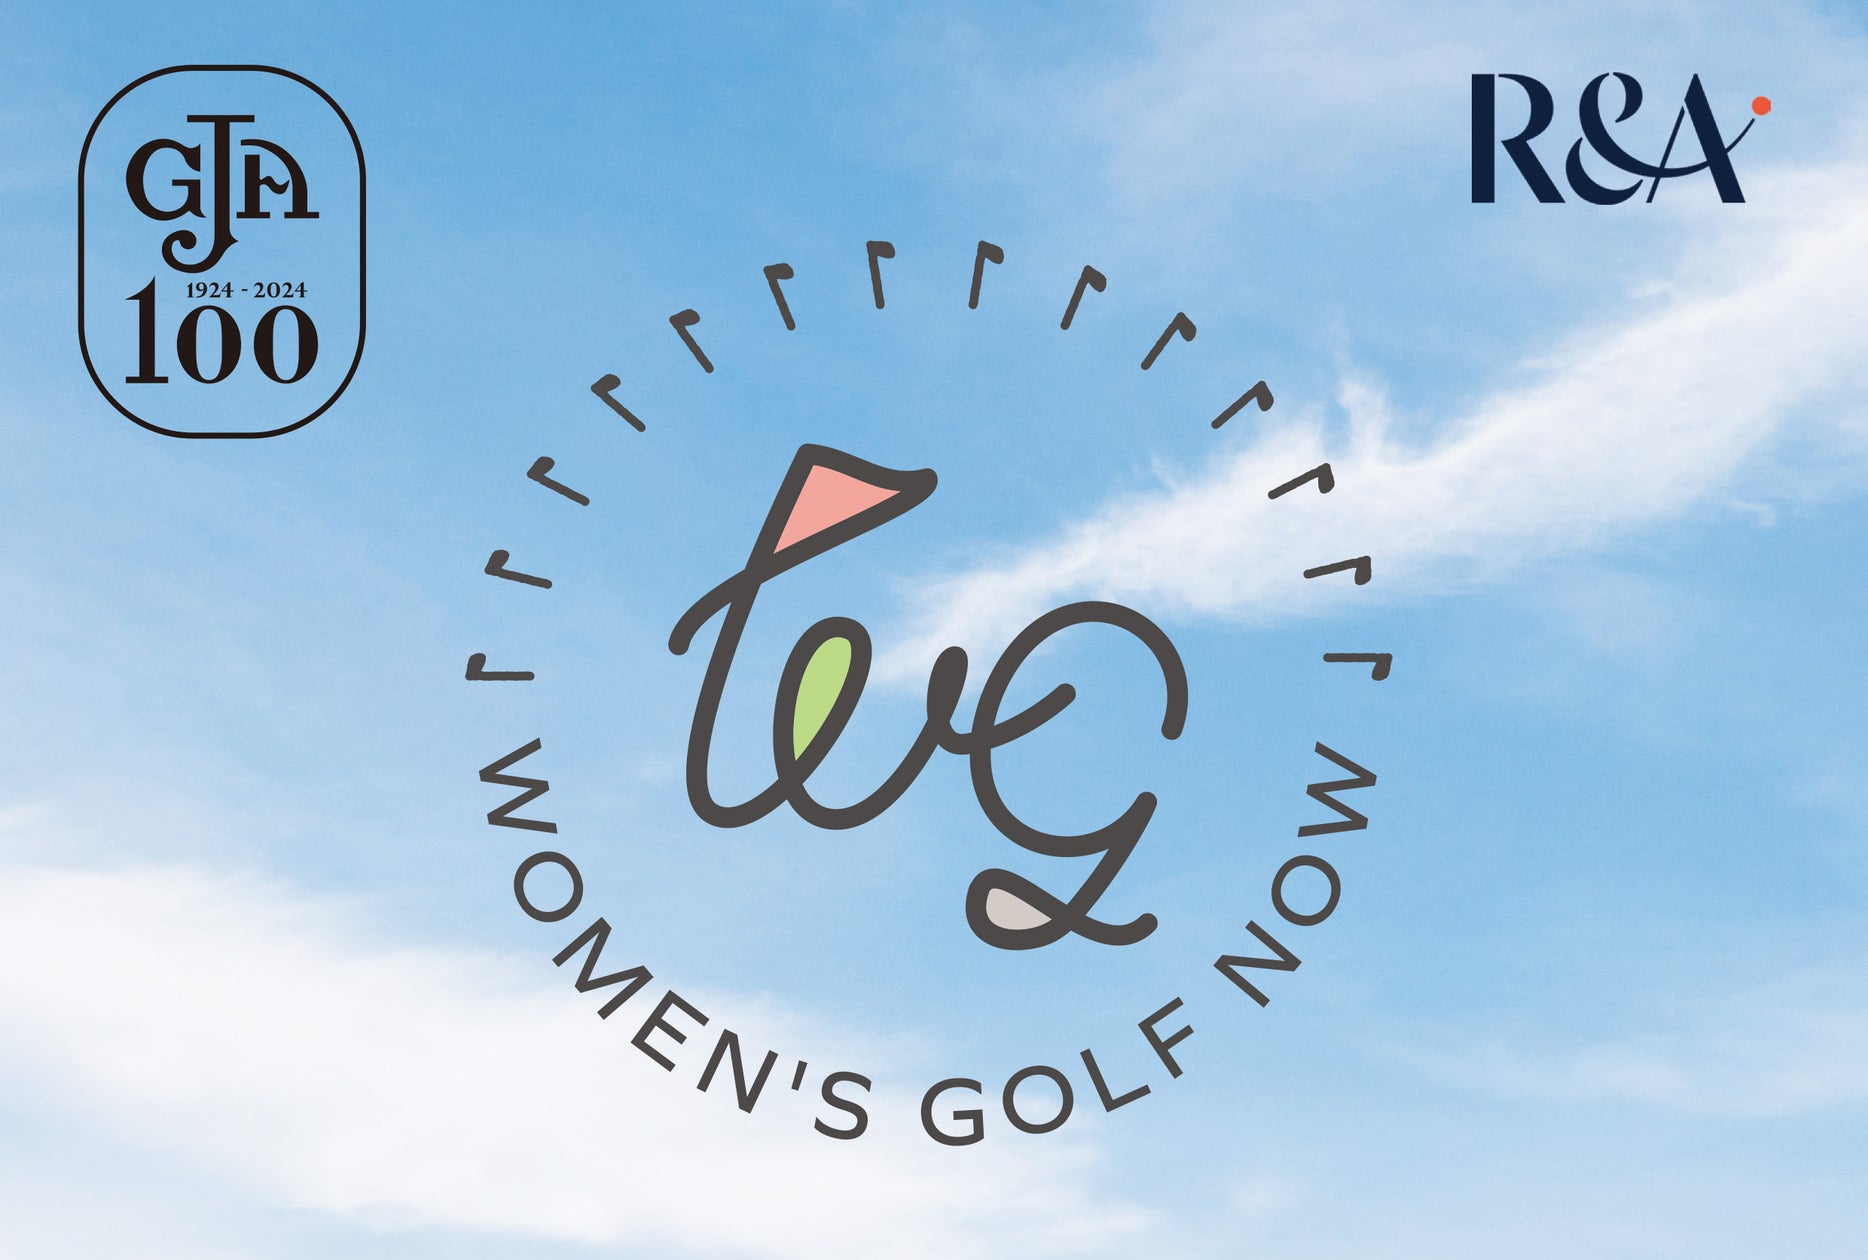 【St ANDREWS】女性ゴルファー普及活動の“WOMEN'S GOLF NOW”に賛同し、JGAオリジナルチップマーカーを直営店舗でプレゼント